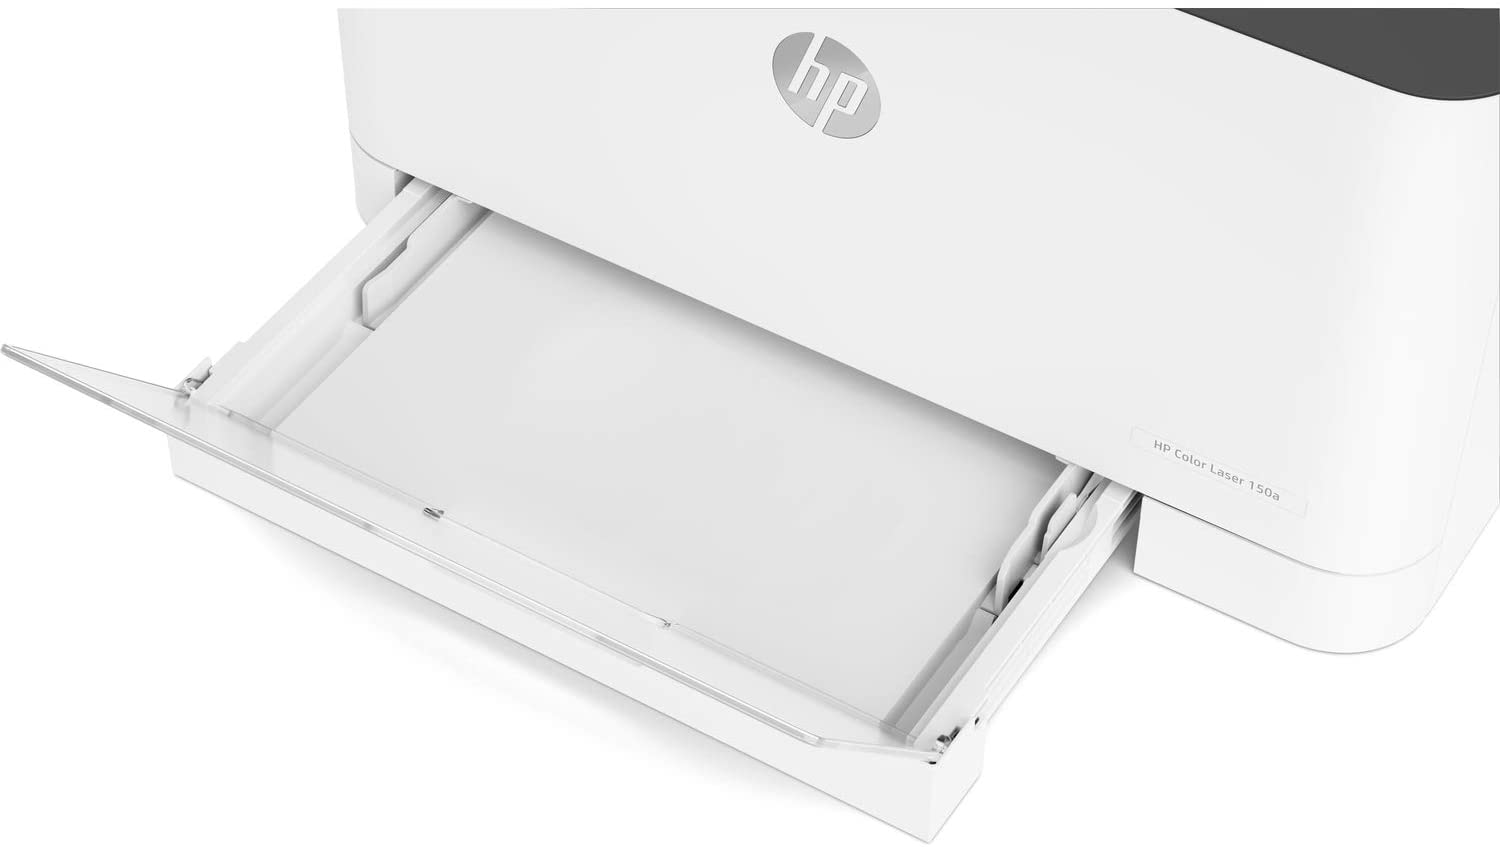 Impresora HP color láser 150a papel